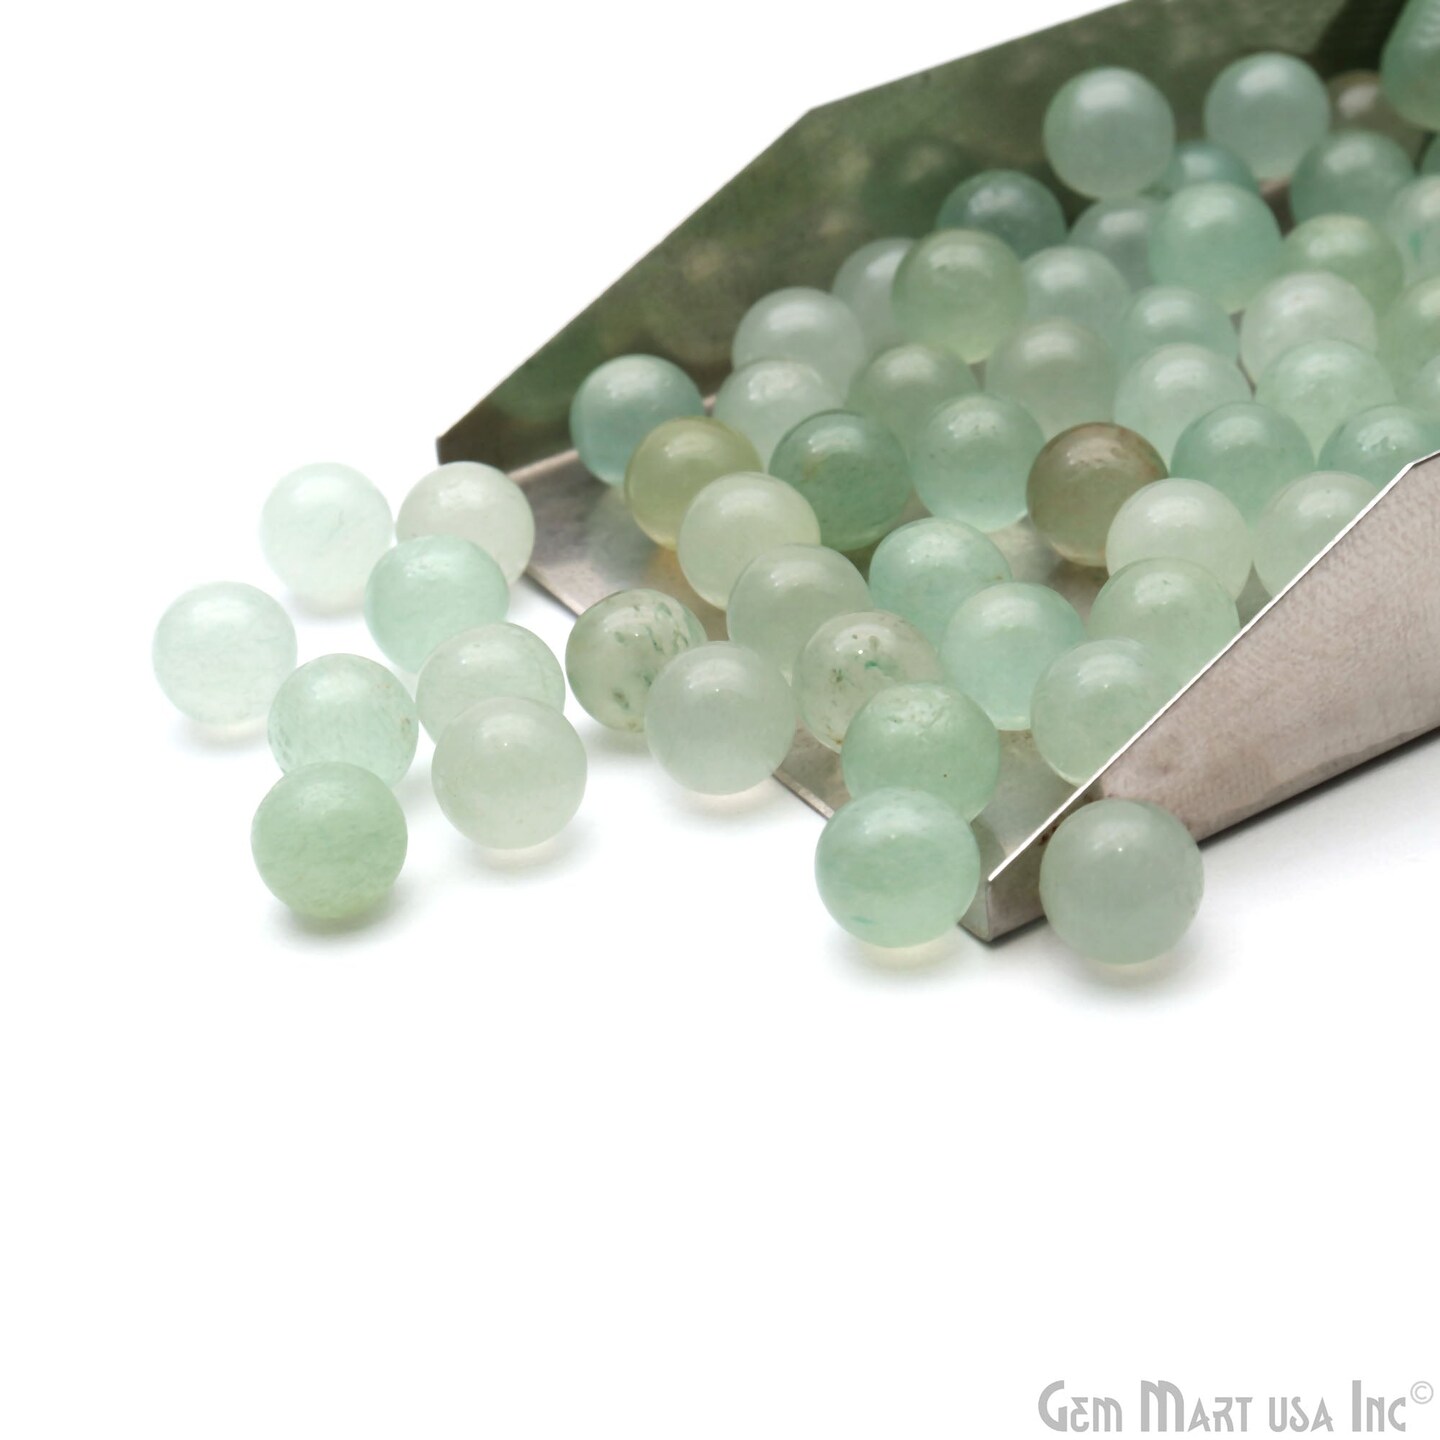 Gemstone Undrilled Round Beads, 7mm Natural Gem Beads, DIY Bracelet Jewelry, 10 pc Lot, GemMartUSA (60106)